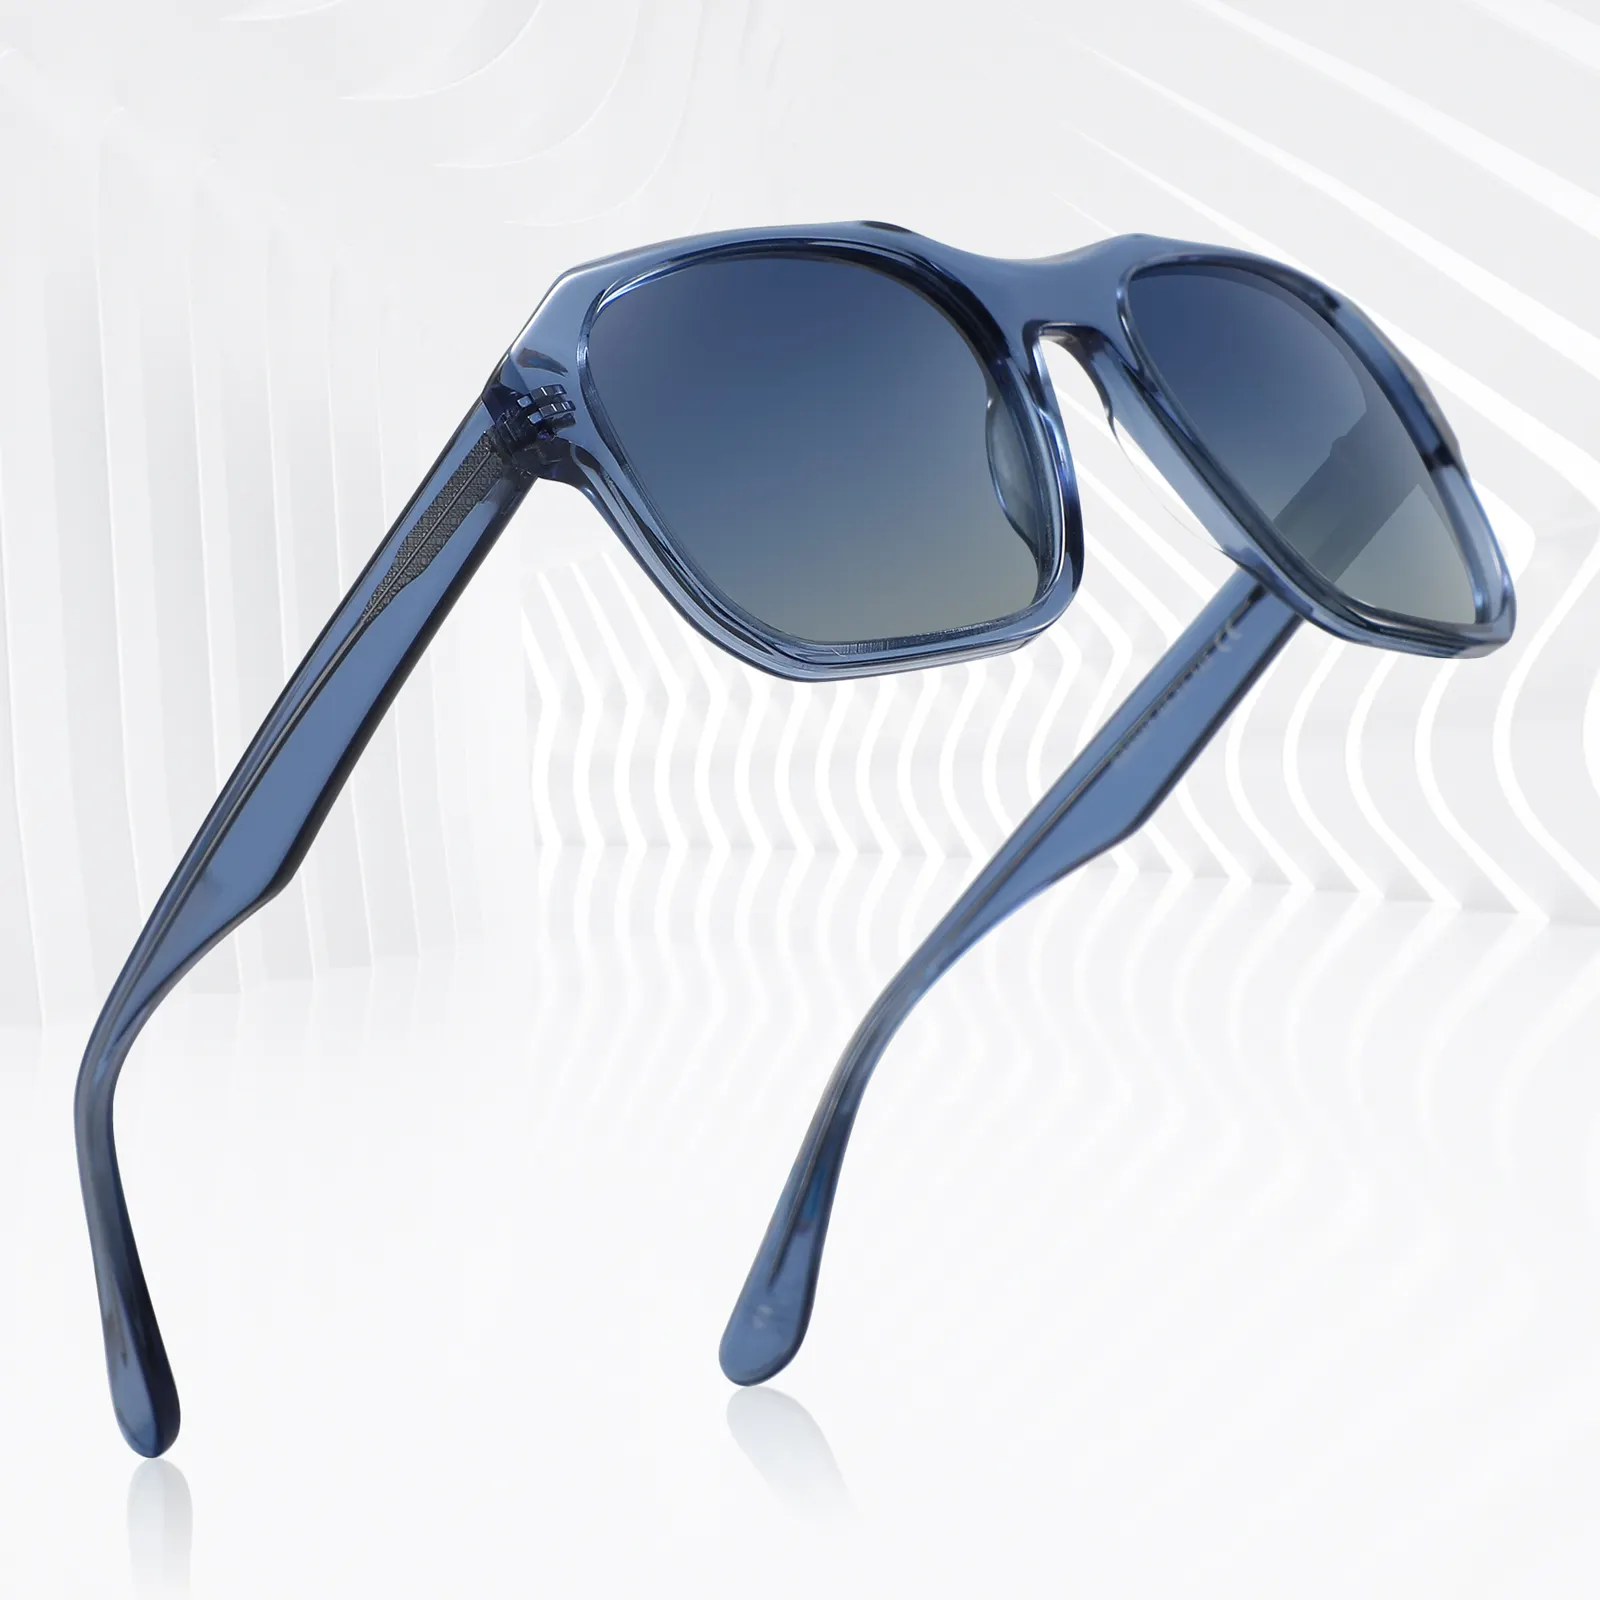 2022 new arrival acetate frame sunglasses high quality polarized lenses woman man